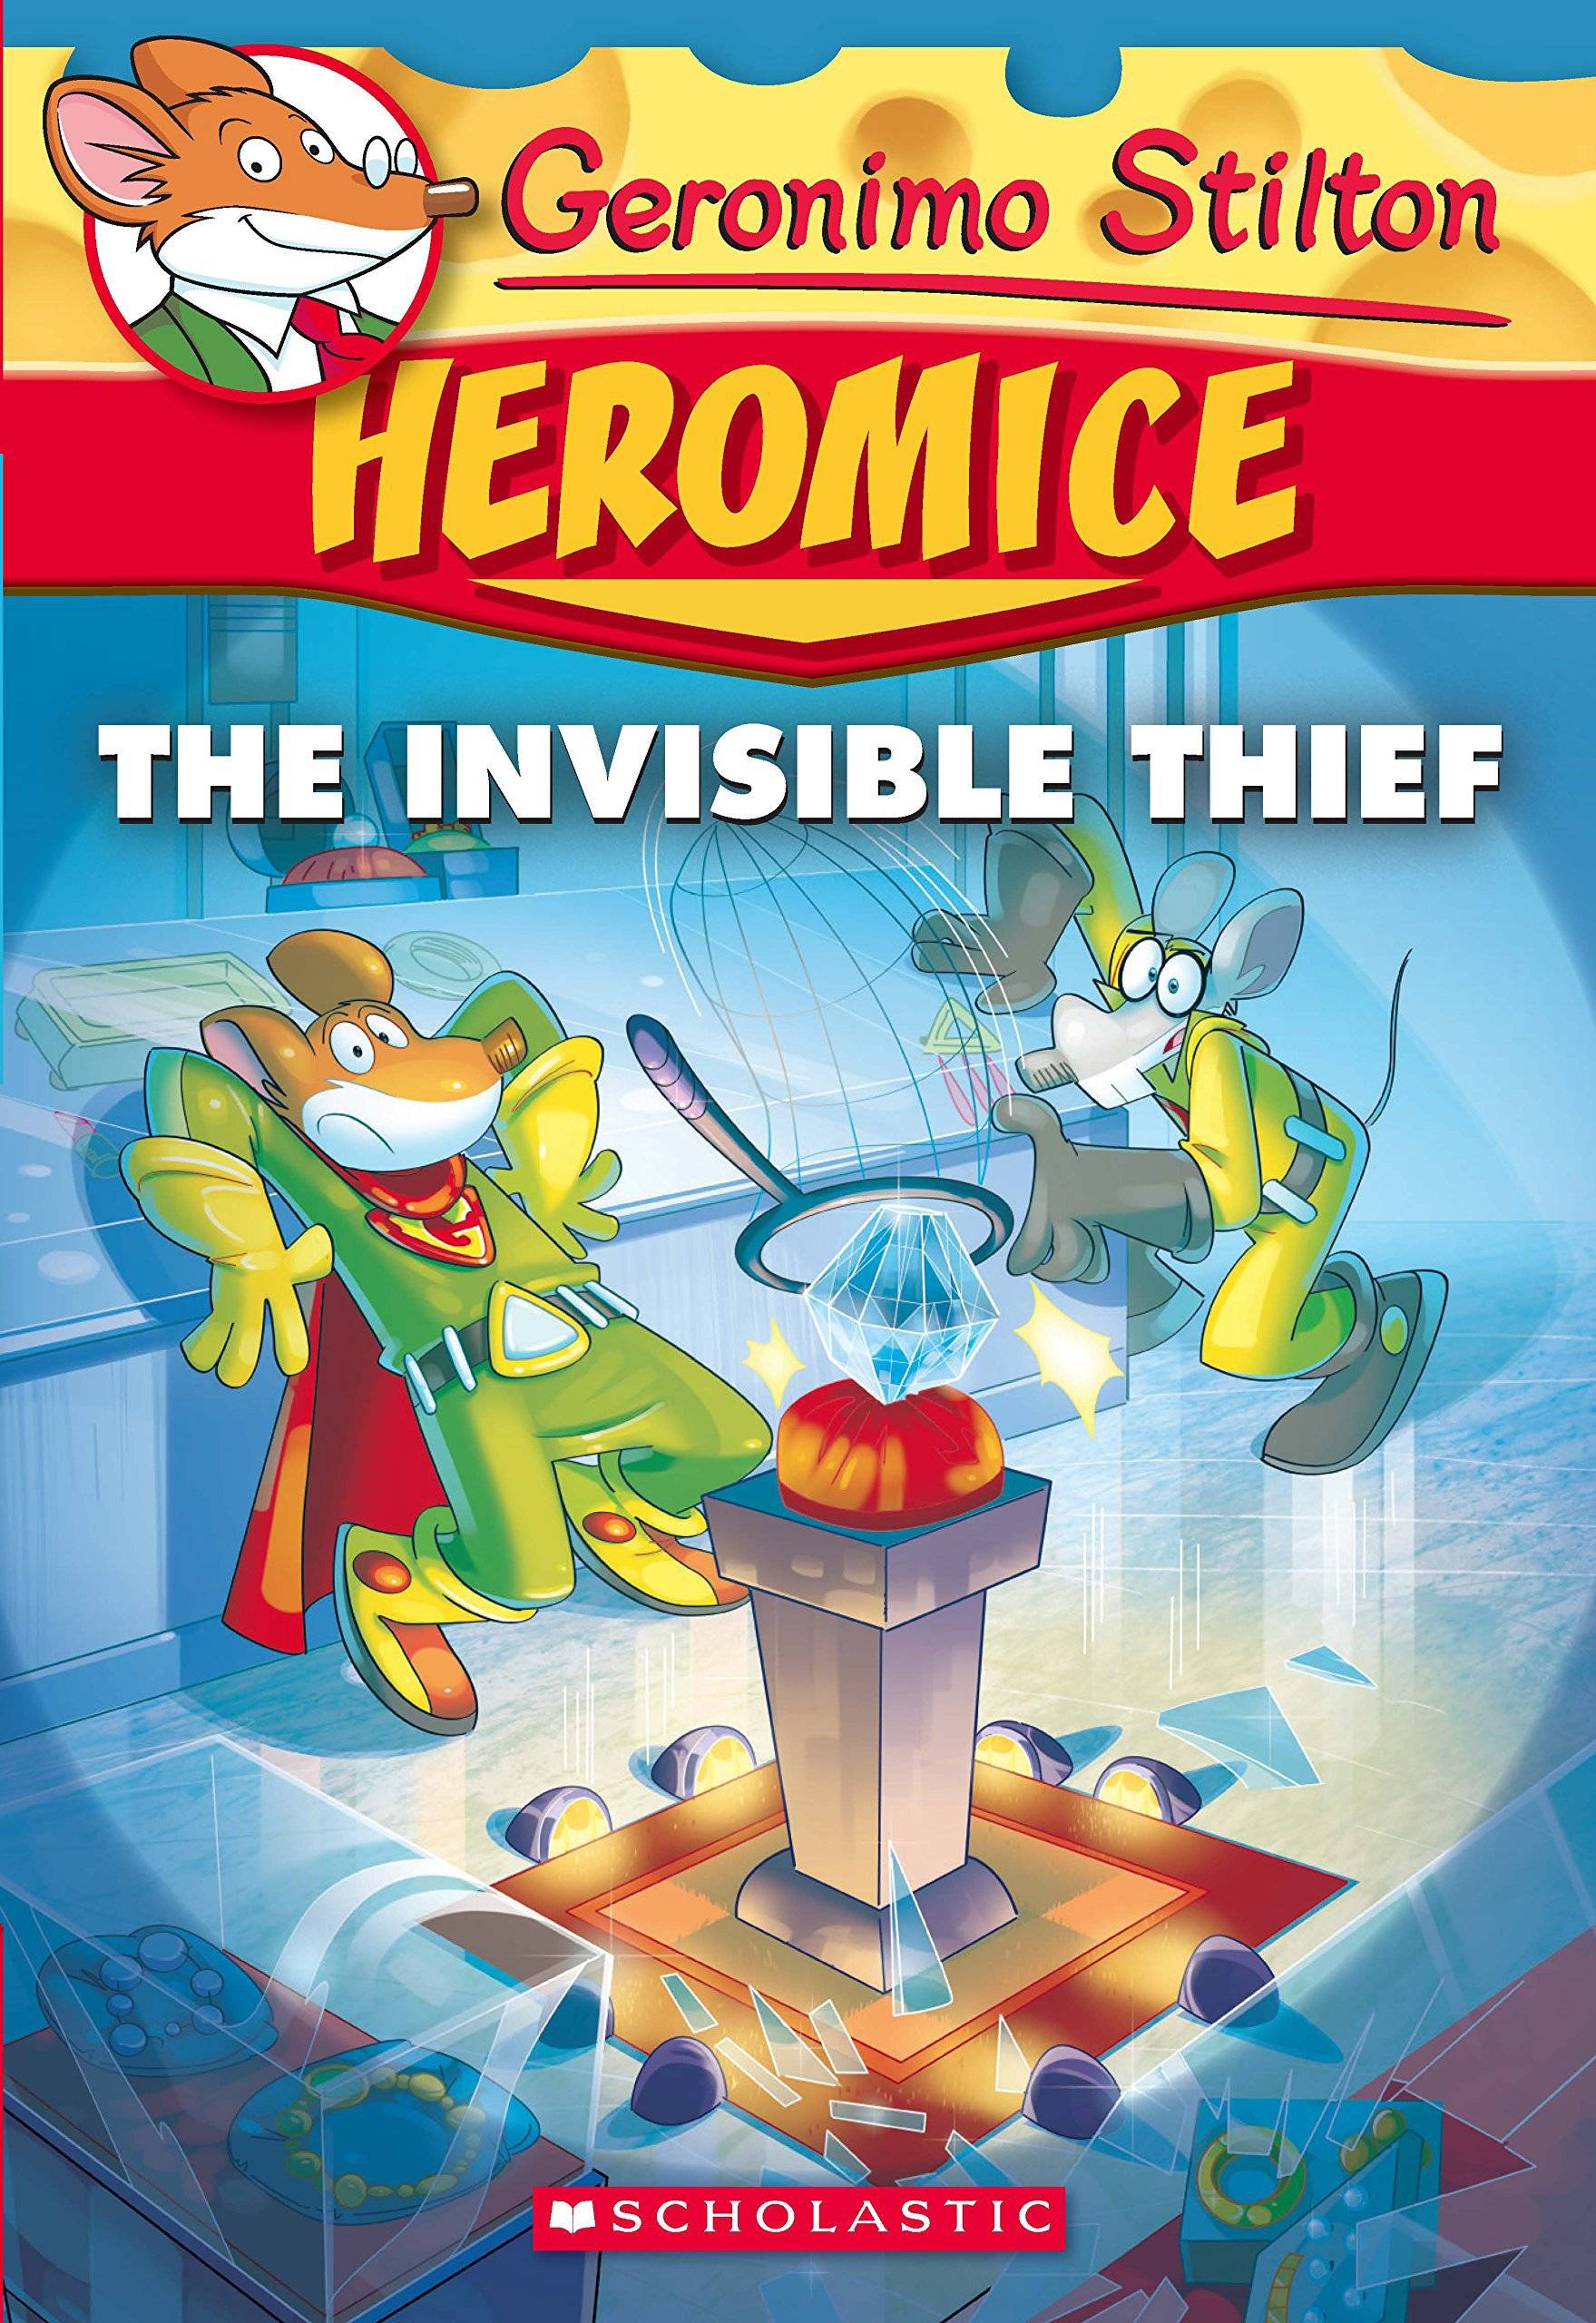 IMG : Geronimo Stilton Heromice the invisible thief